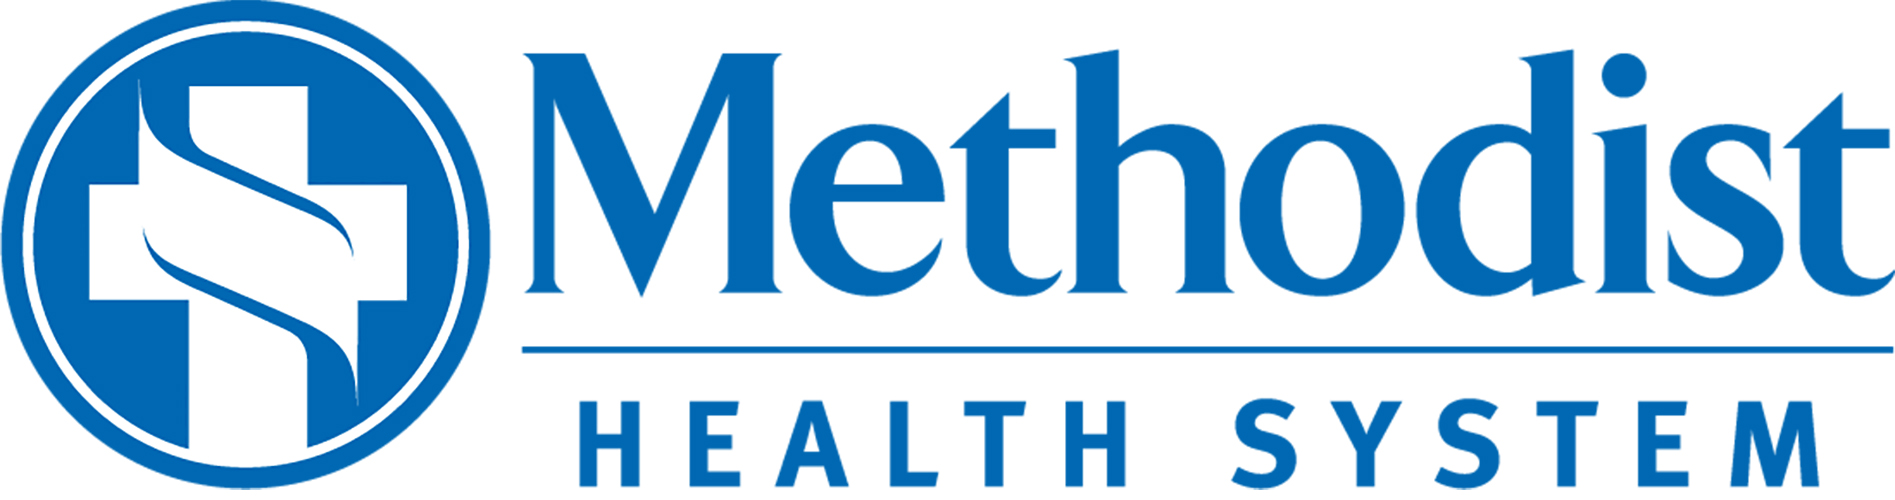 500 Methodist Mansfield Medical Center logo